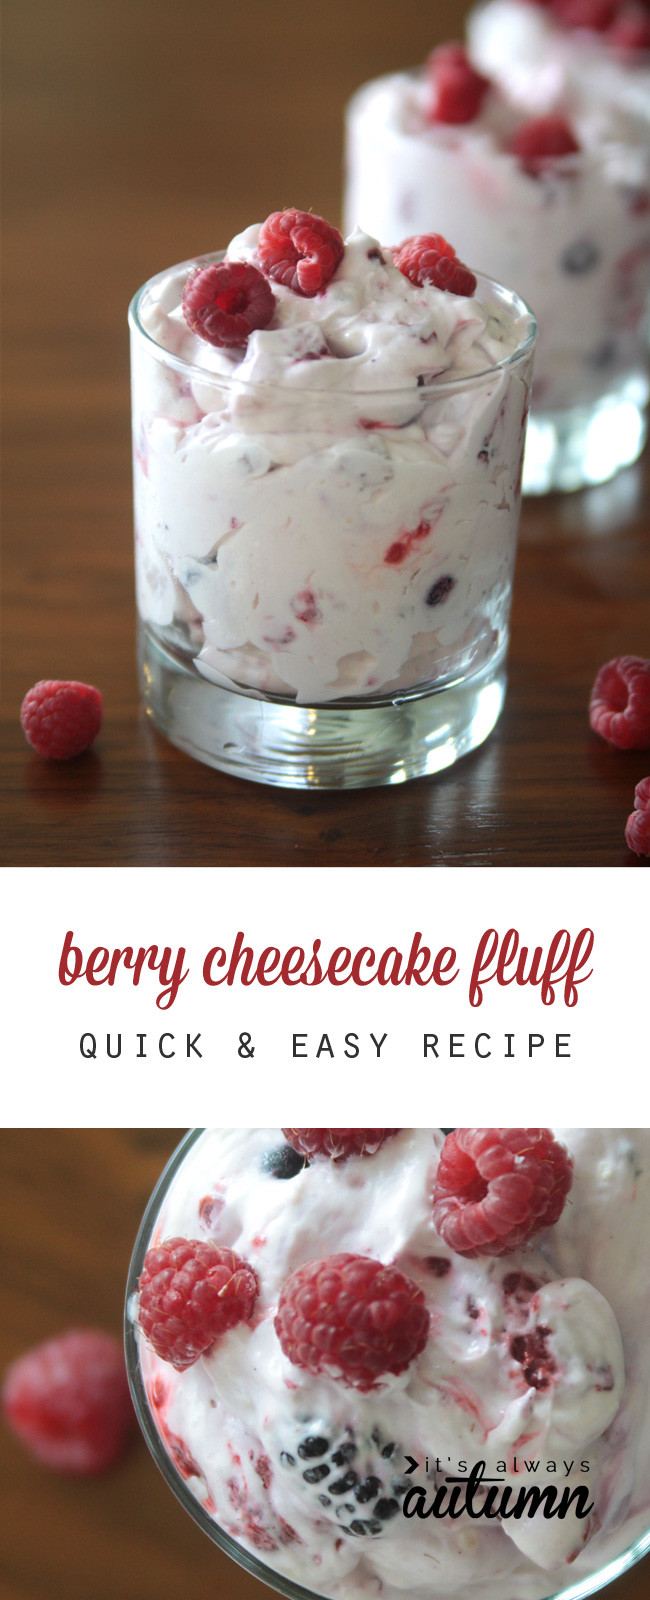 Light Desserts Recipes Healthy 20 Best Berry Cheesecake Fluff A Lighter Holiday Dessert It S